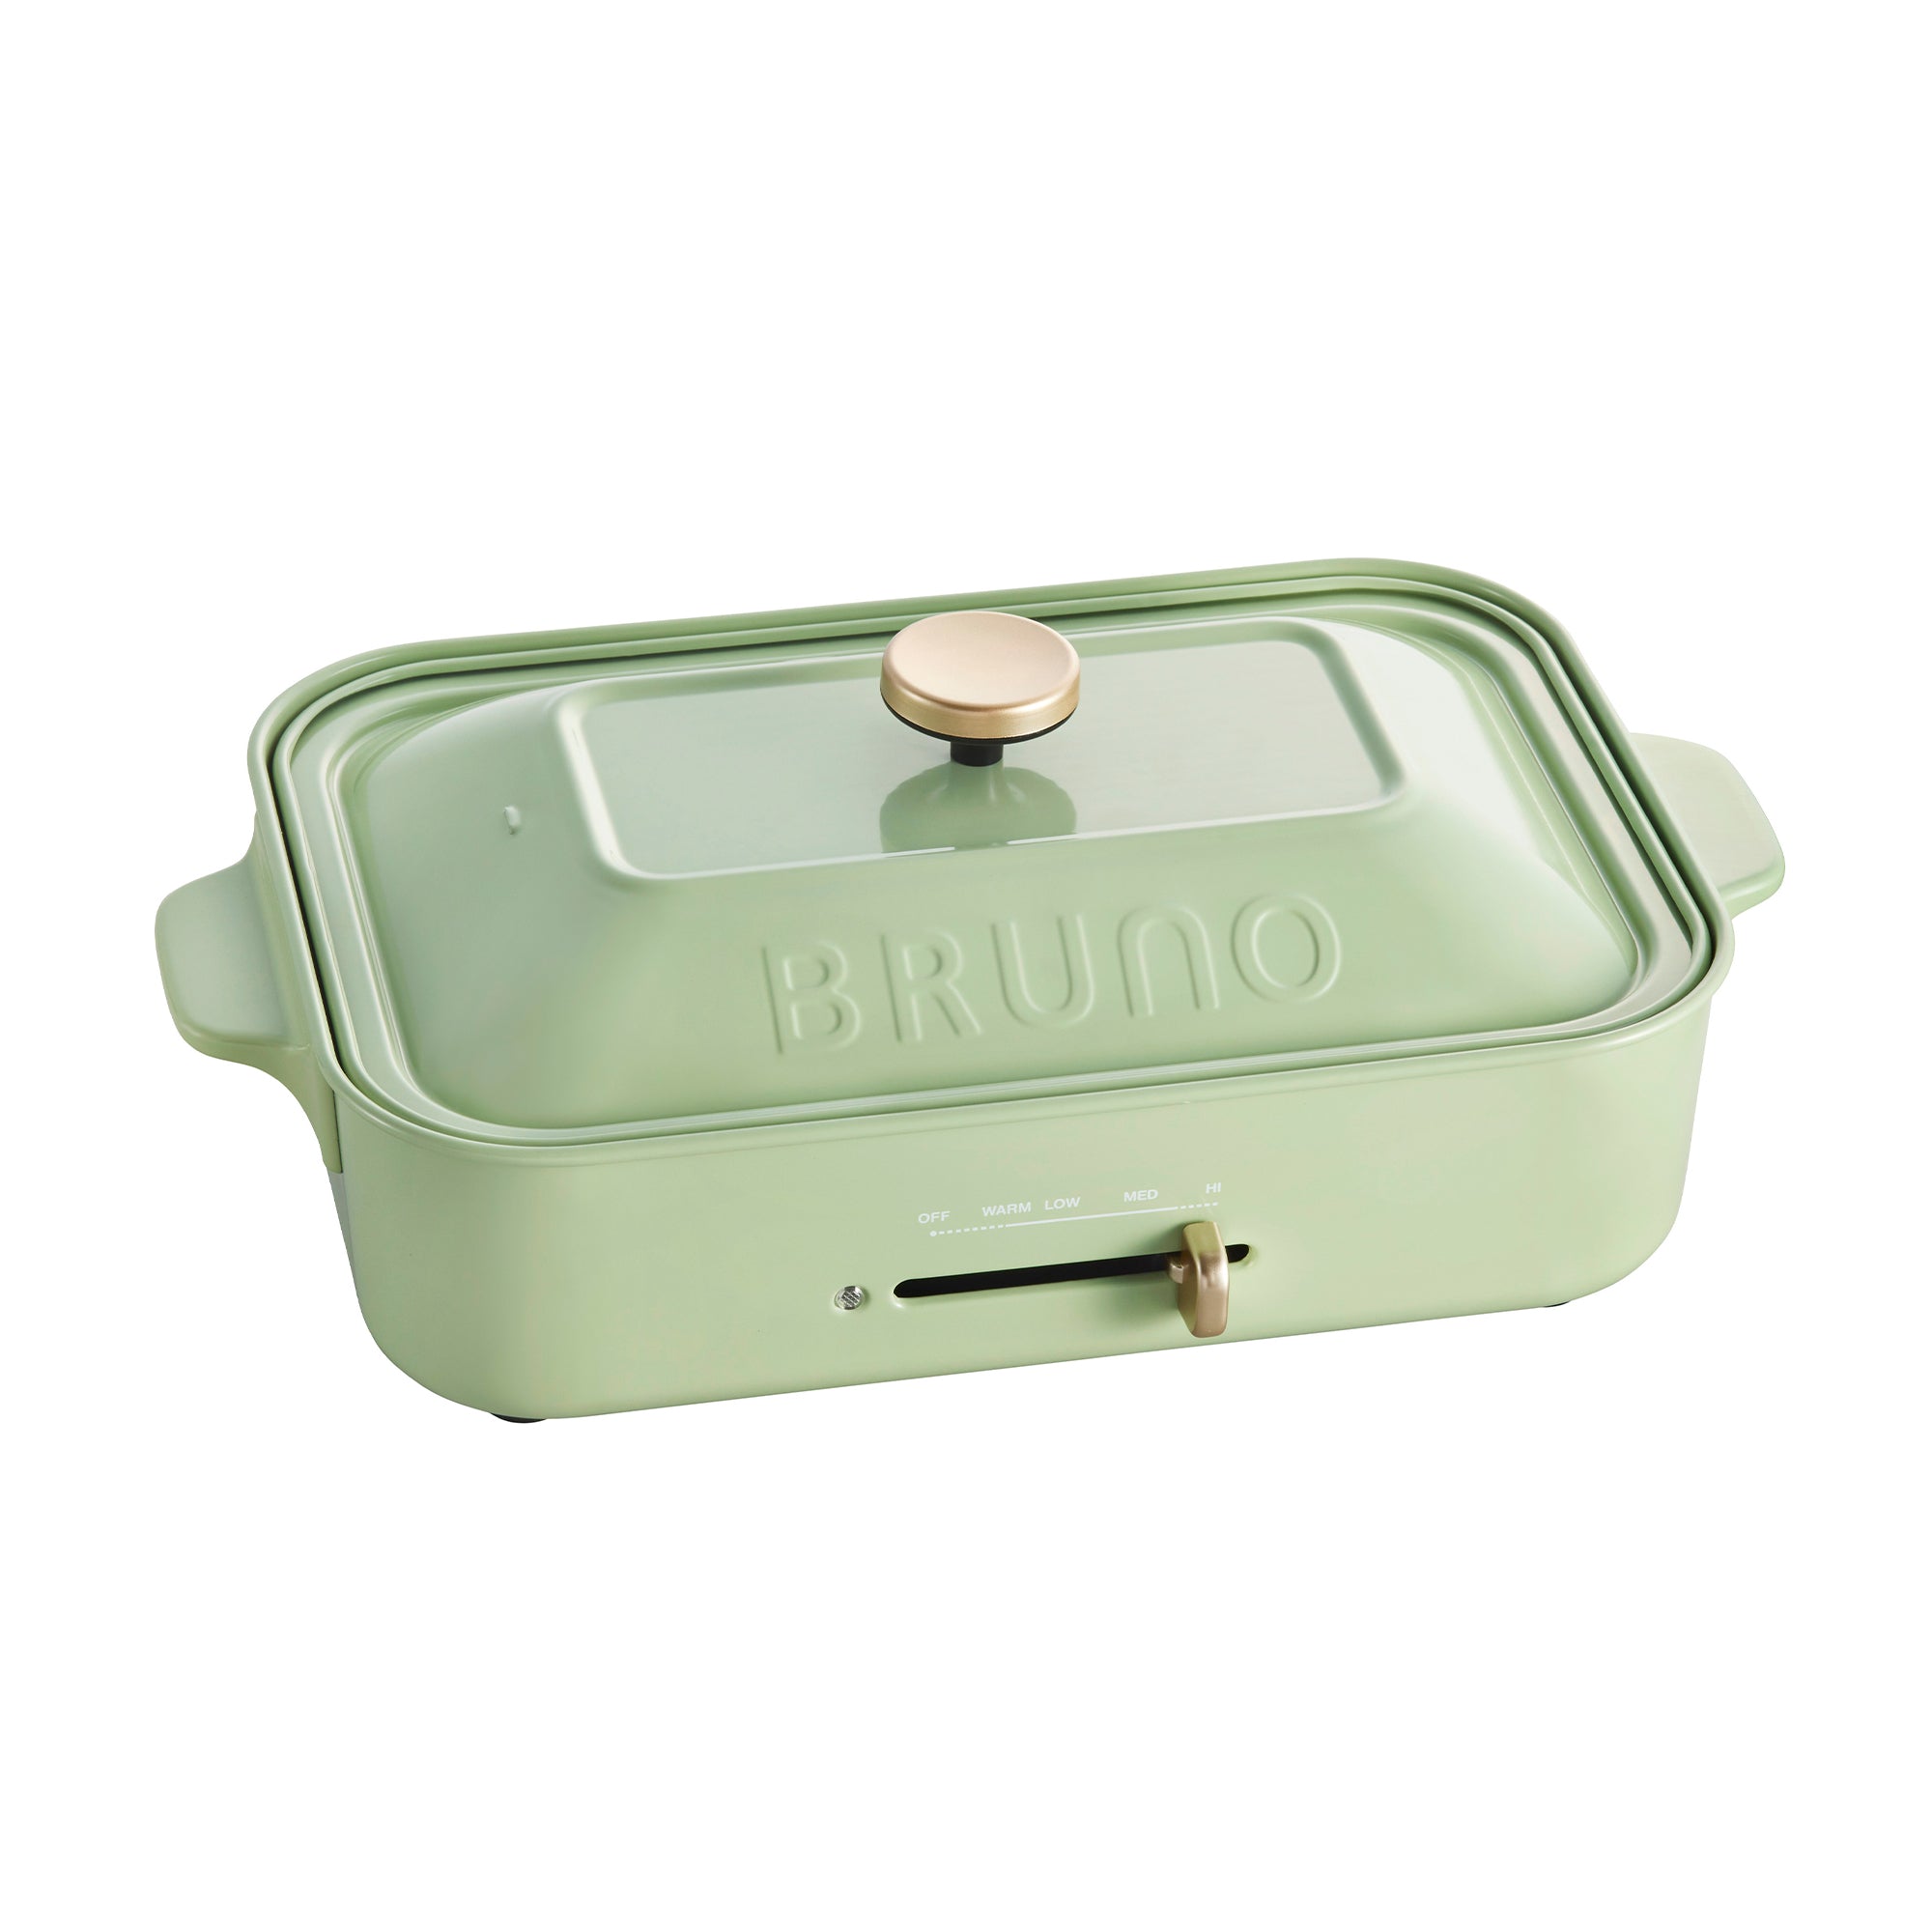 BRUNO 多功能電熱鍋 Compact Hot Plate - 抹茶綠色